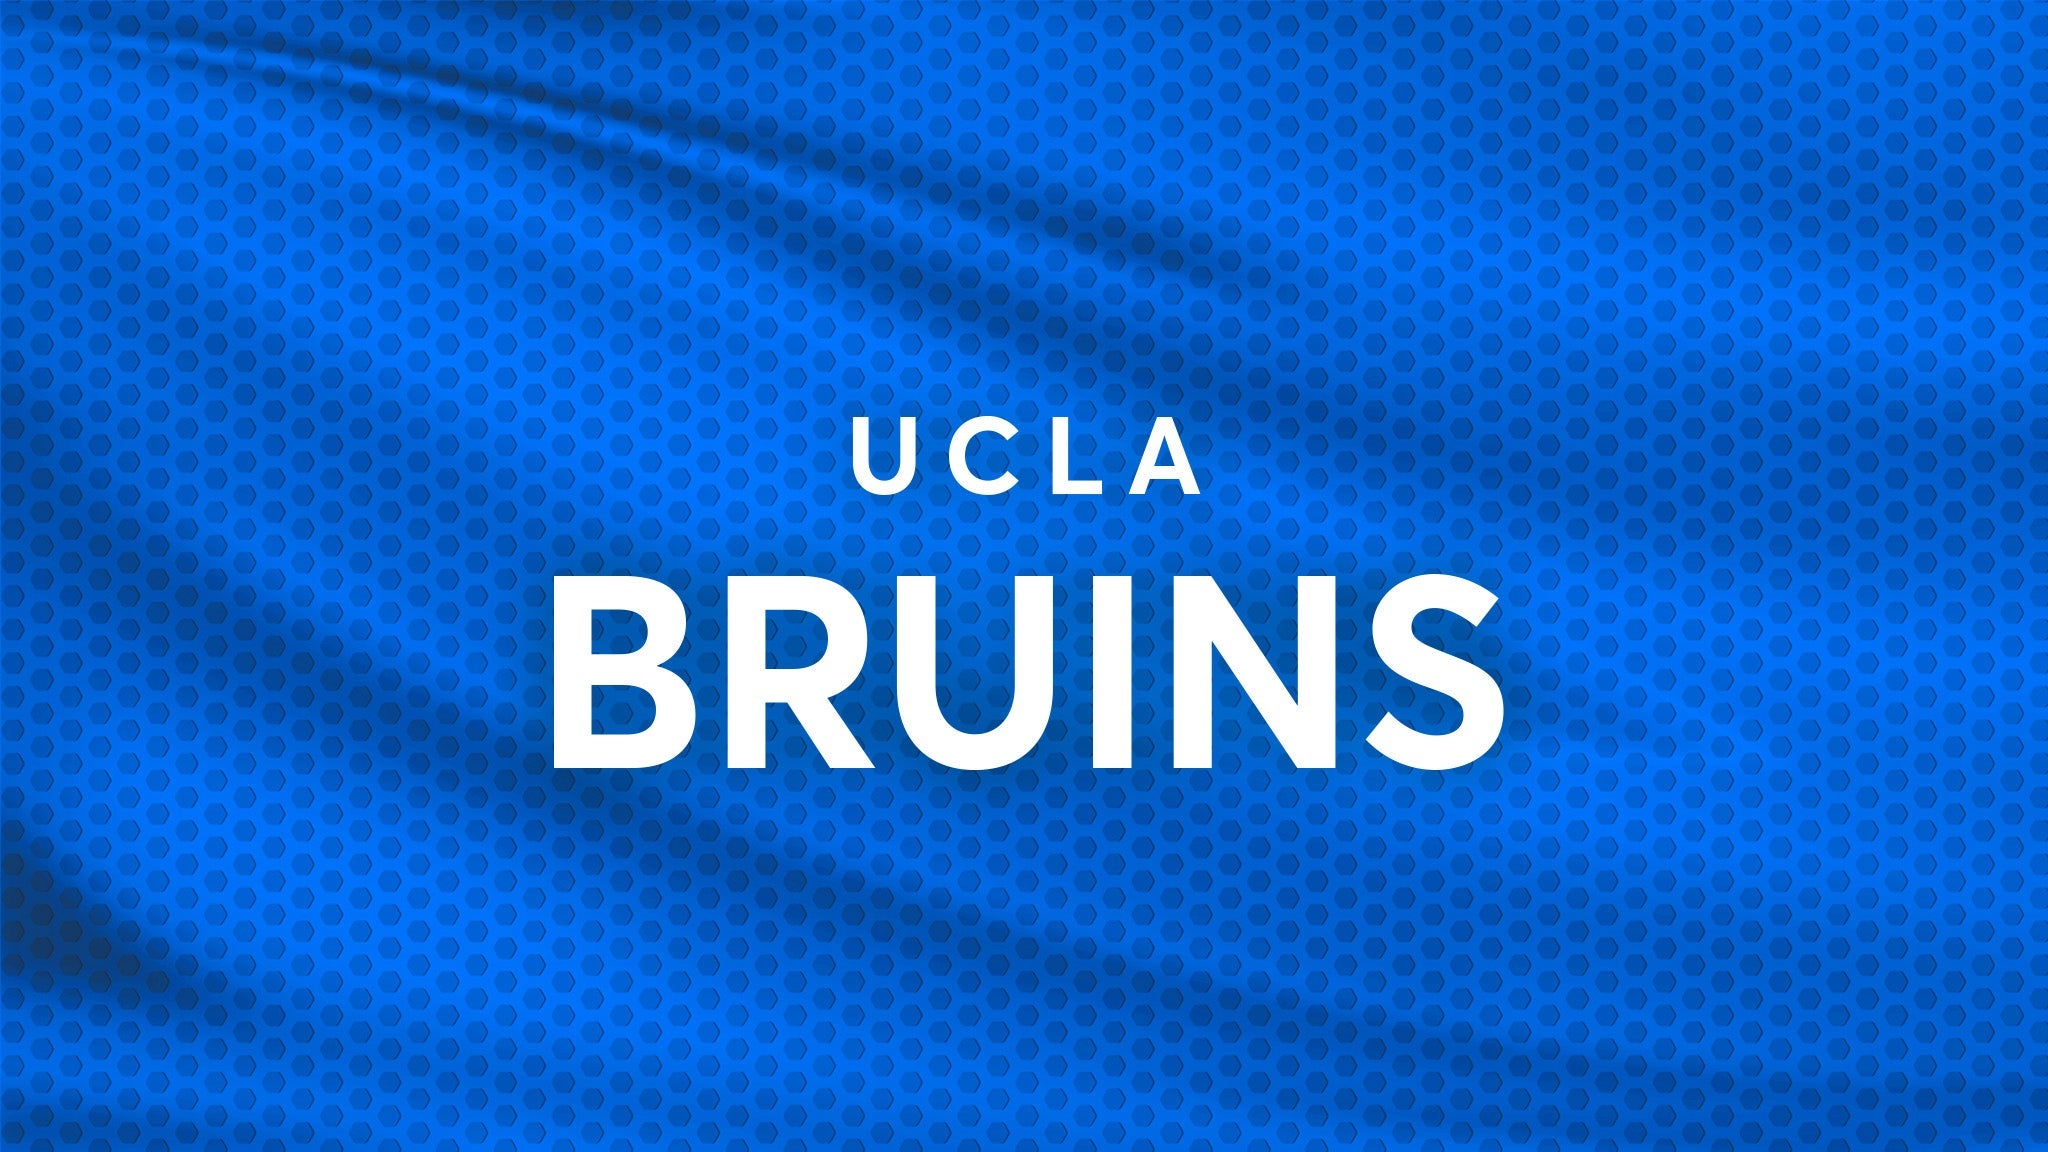 UCLA Bruins Football vs. Washington State  Cougars Football